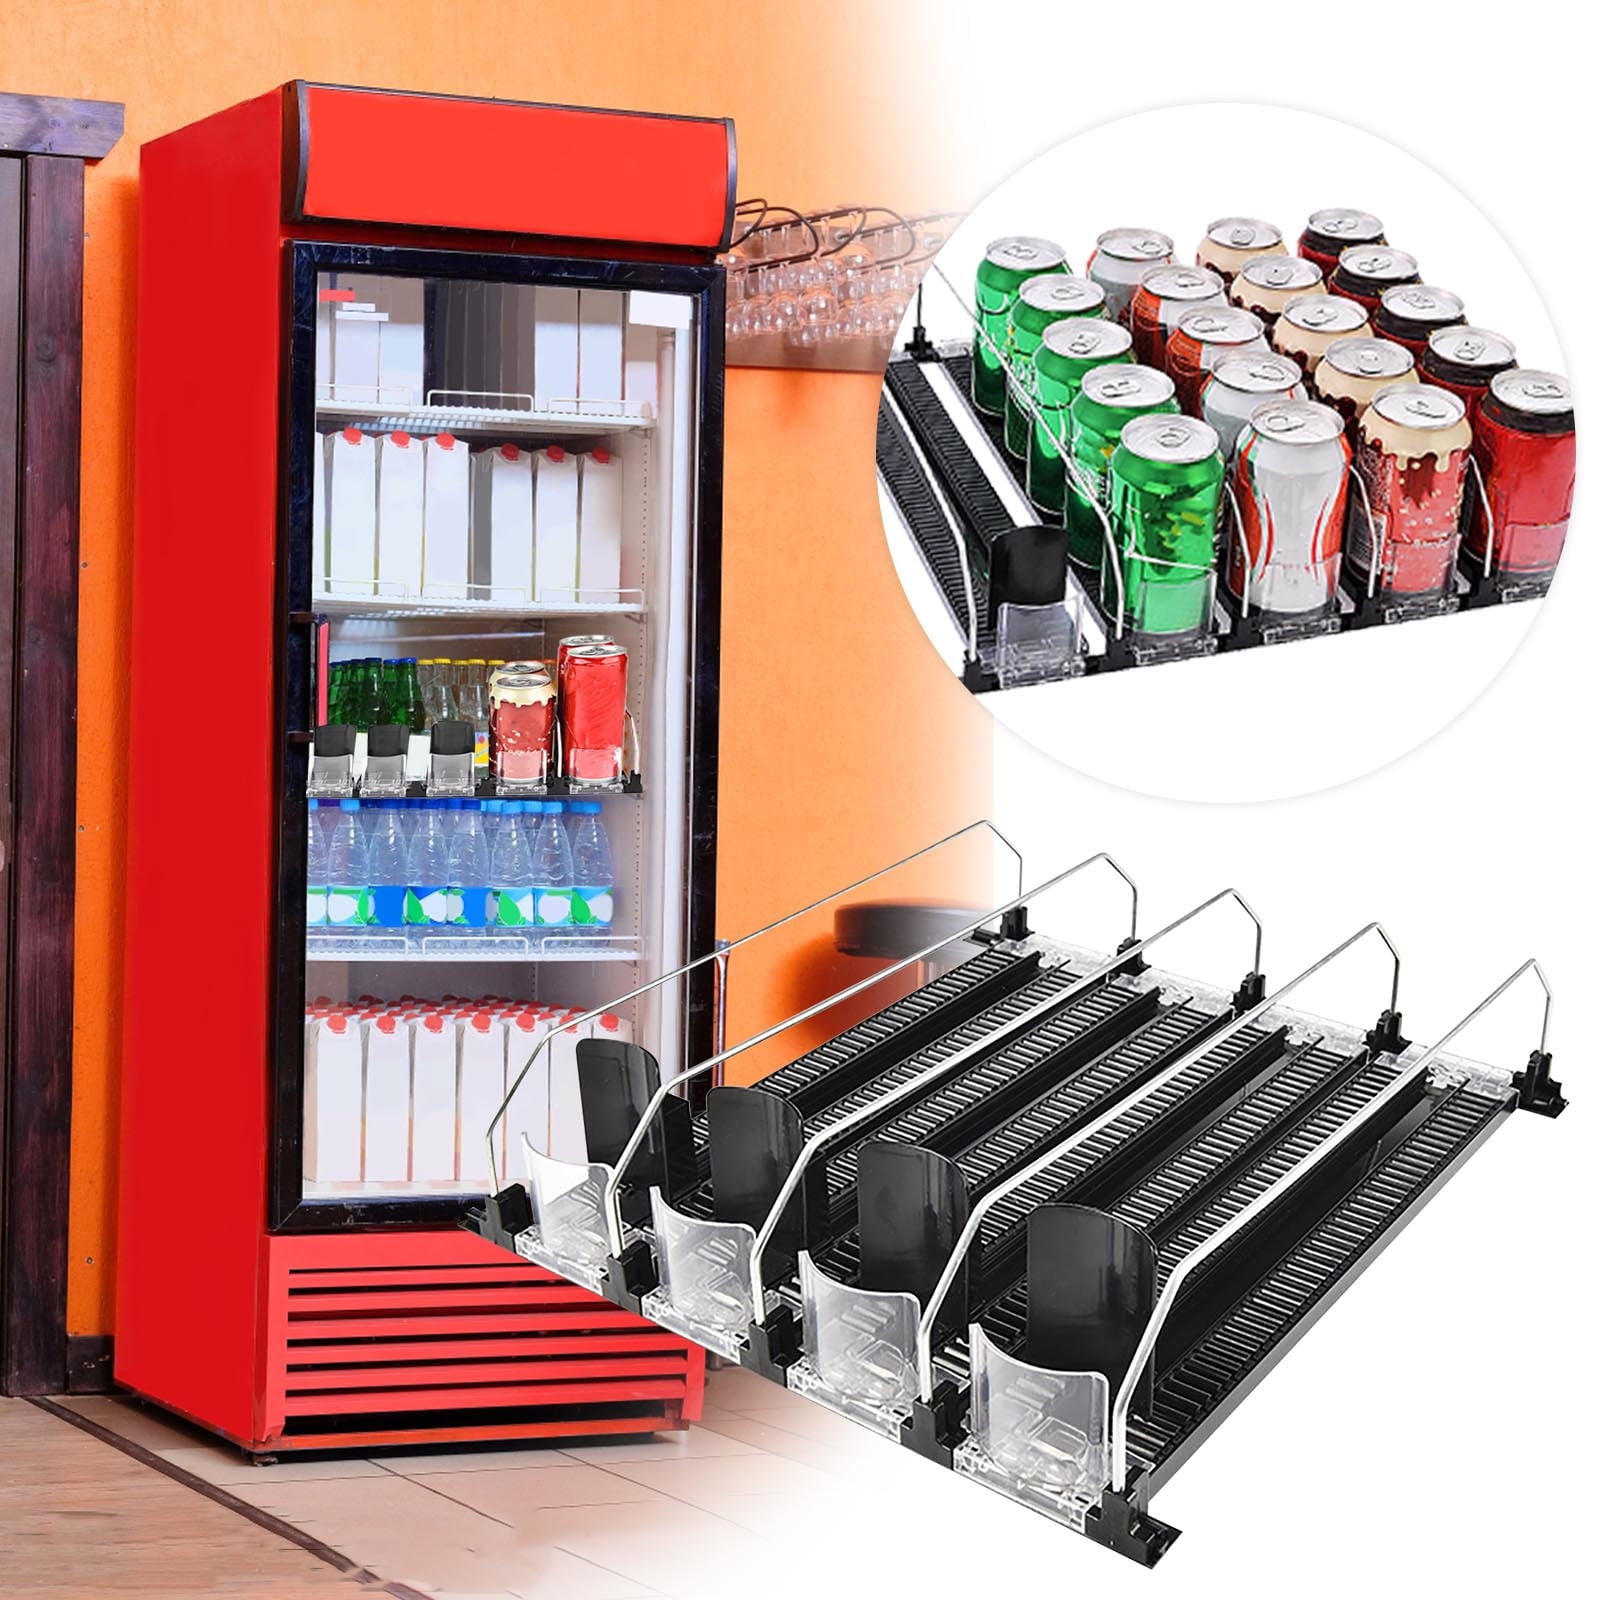 Automatic Drink Pusher Shelf Multifunction Fridge Organizer Storage Holder  for Home Kitchen Energy Drink Bottle - AliExpress